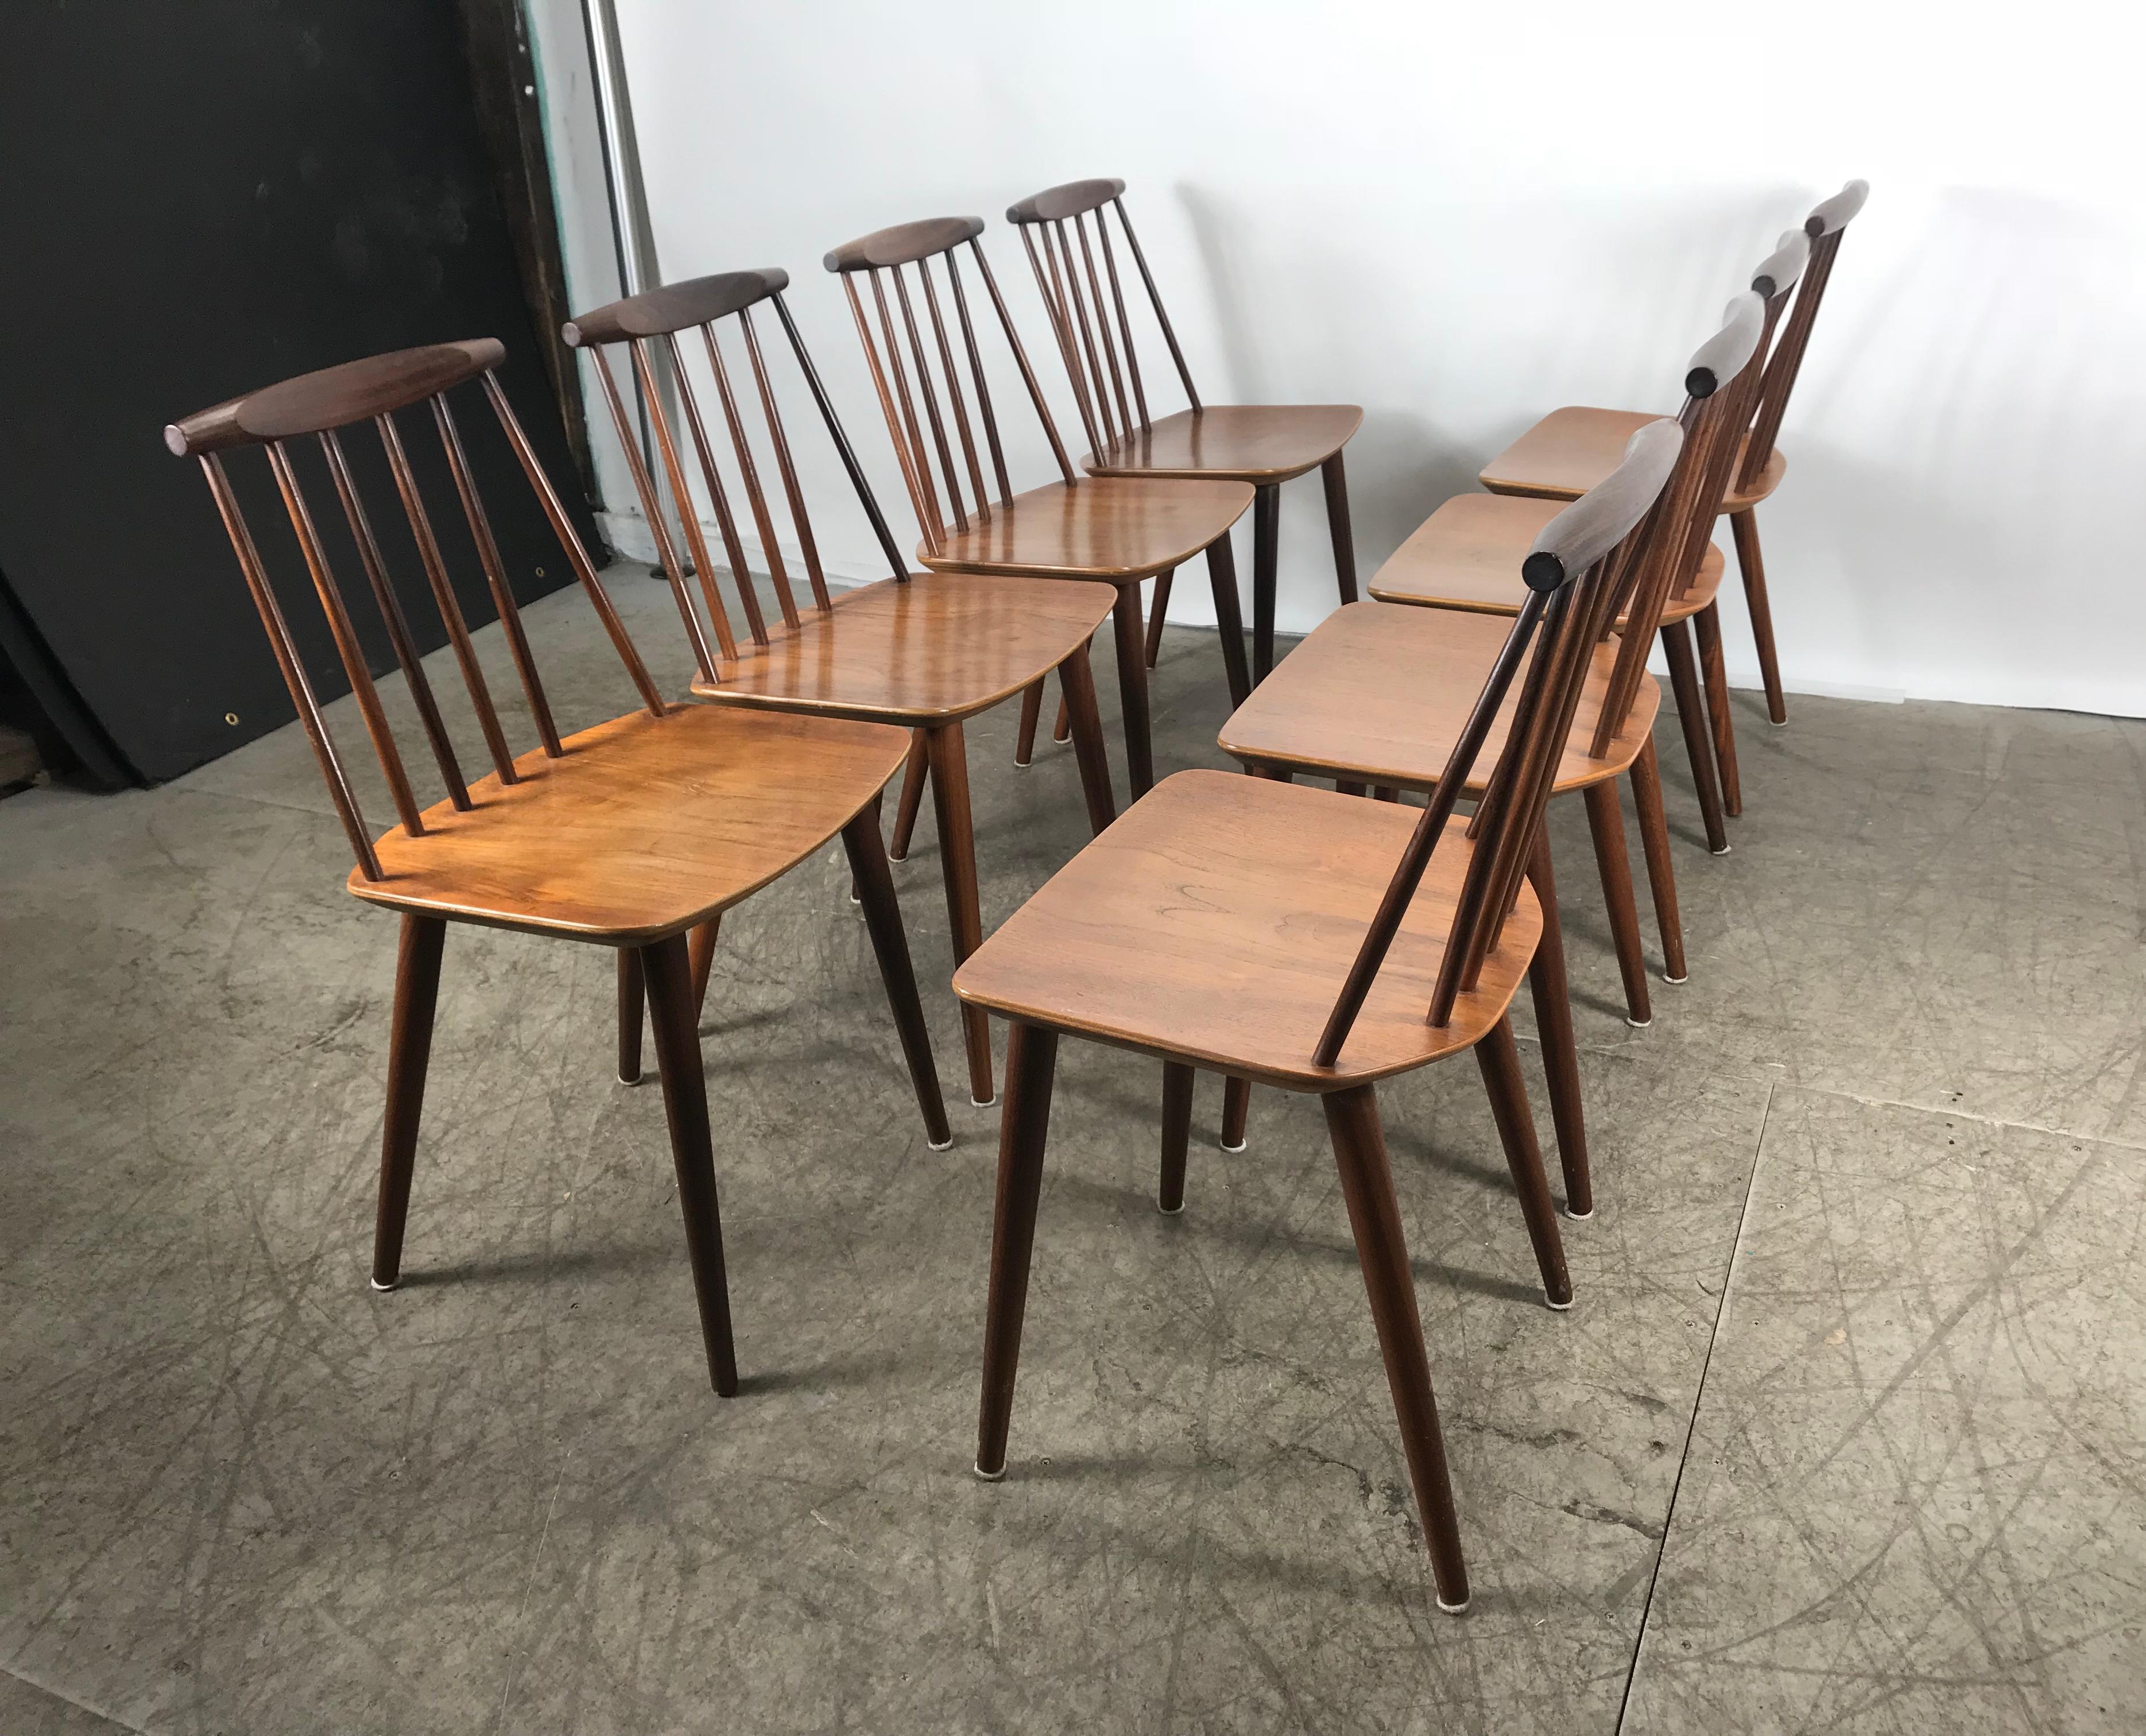 20th Century Set of 8 Stick Chairs Denmark, Mobler J77, Folke Palsson for FDB Mobler